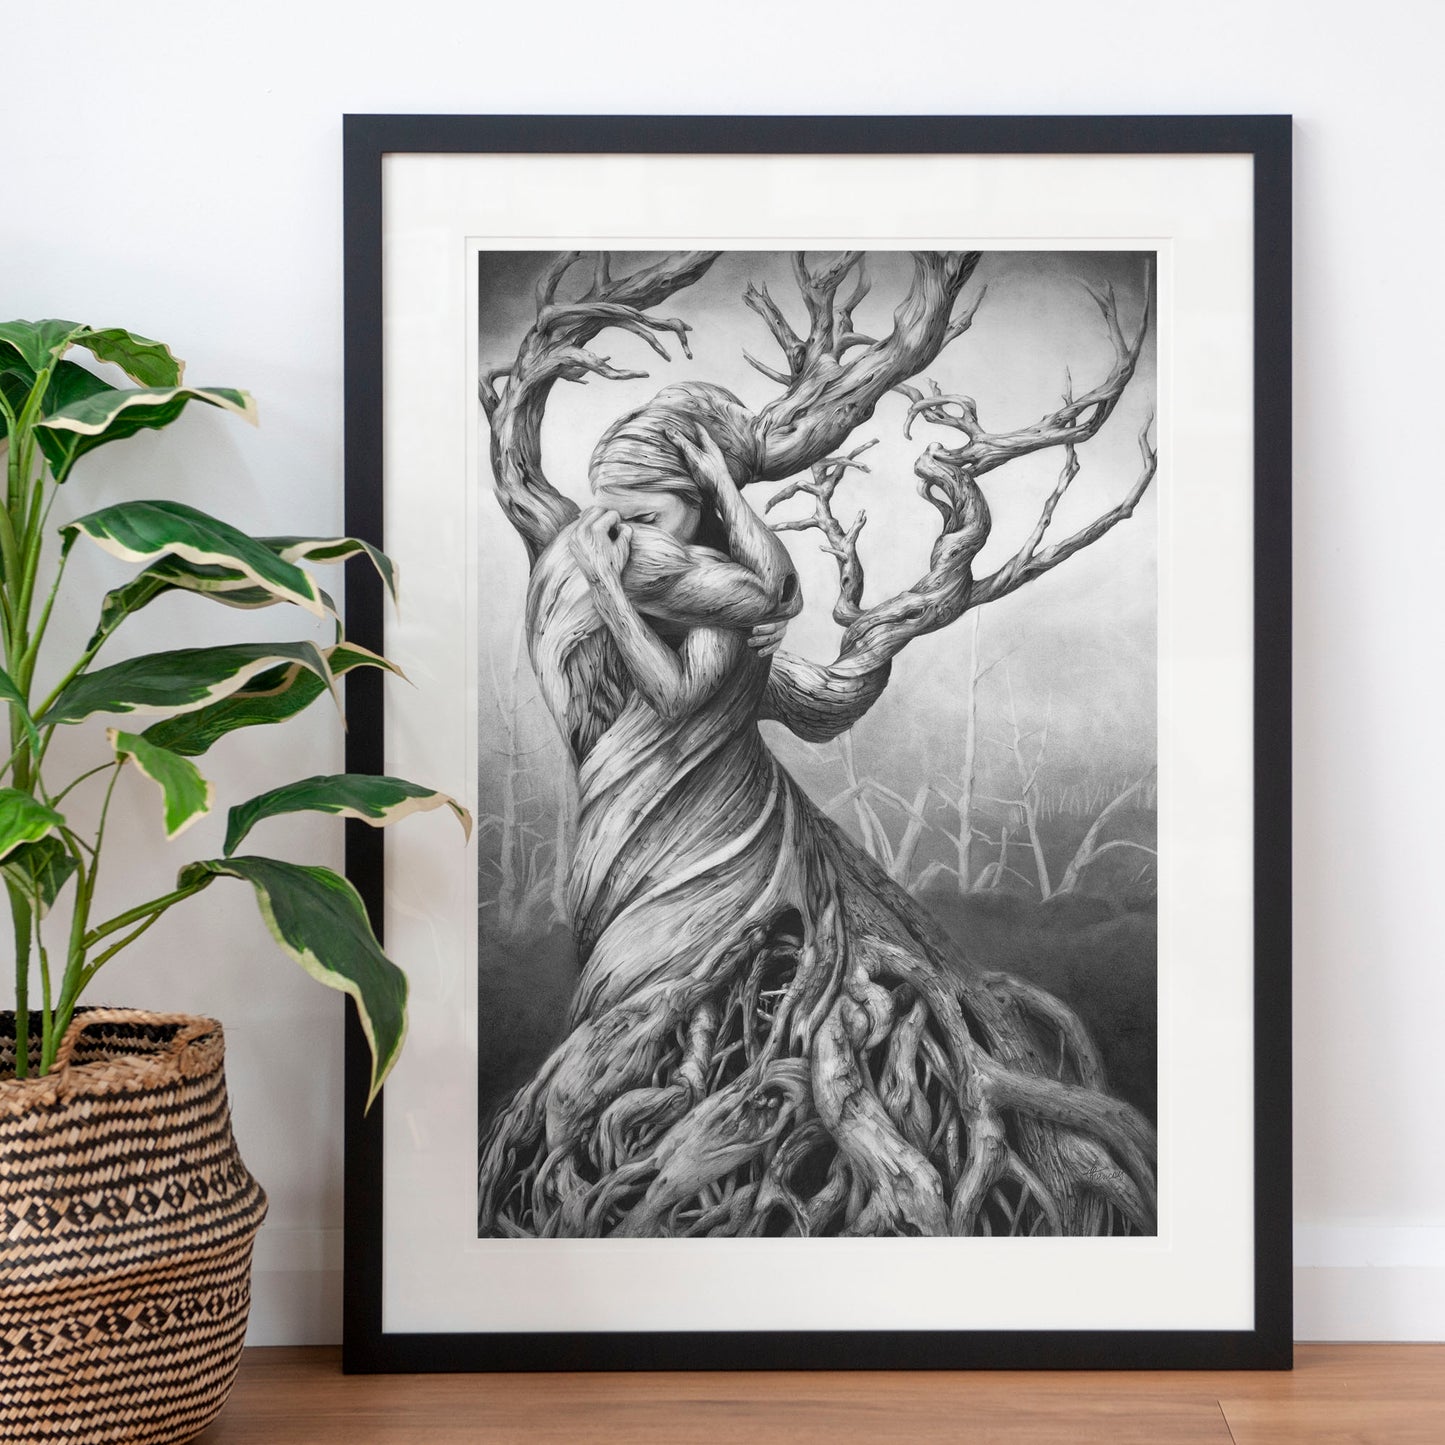 'One Tree' art print